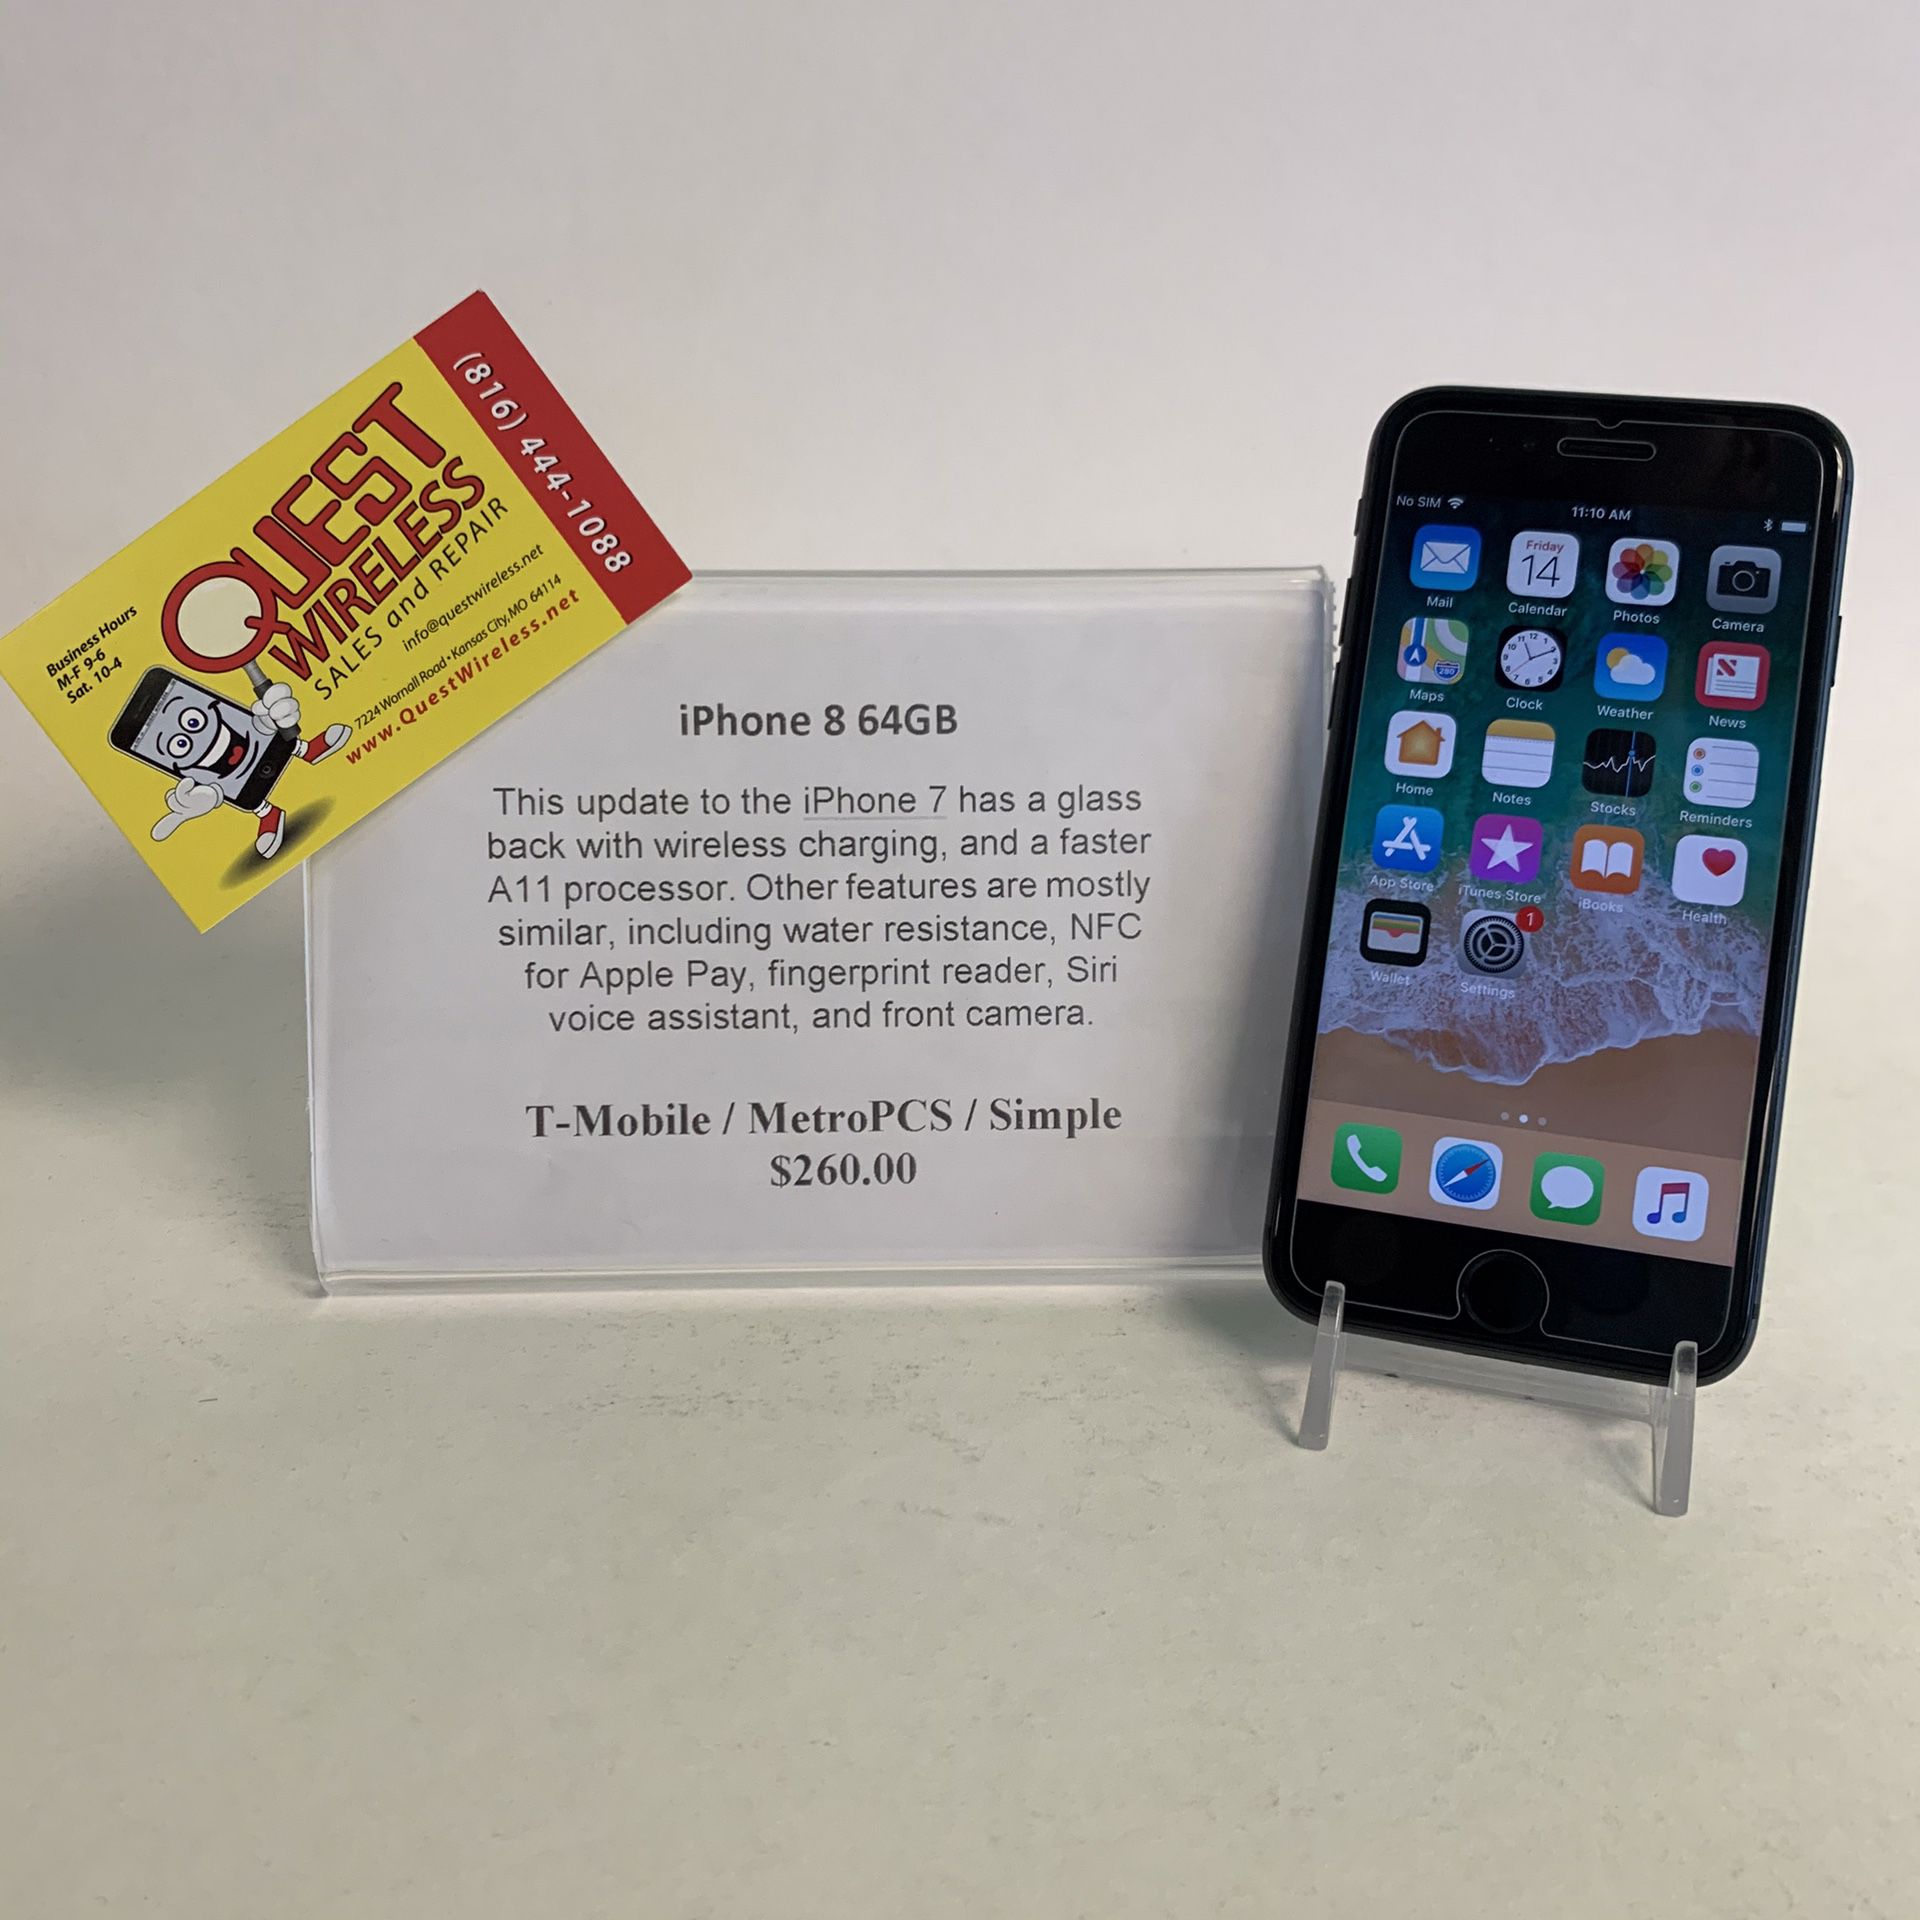 iPhone 8 64GB T-Mobile/MetroPCS